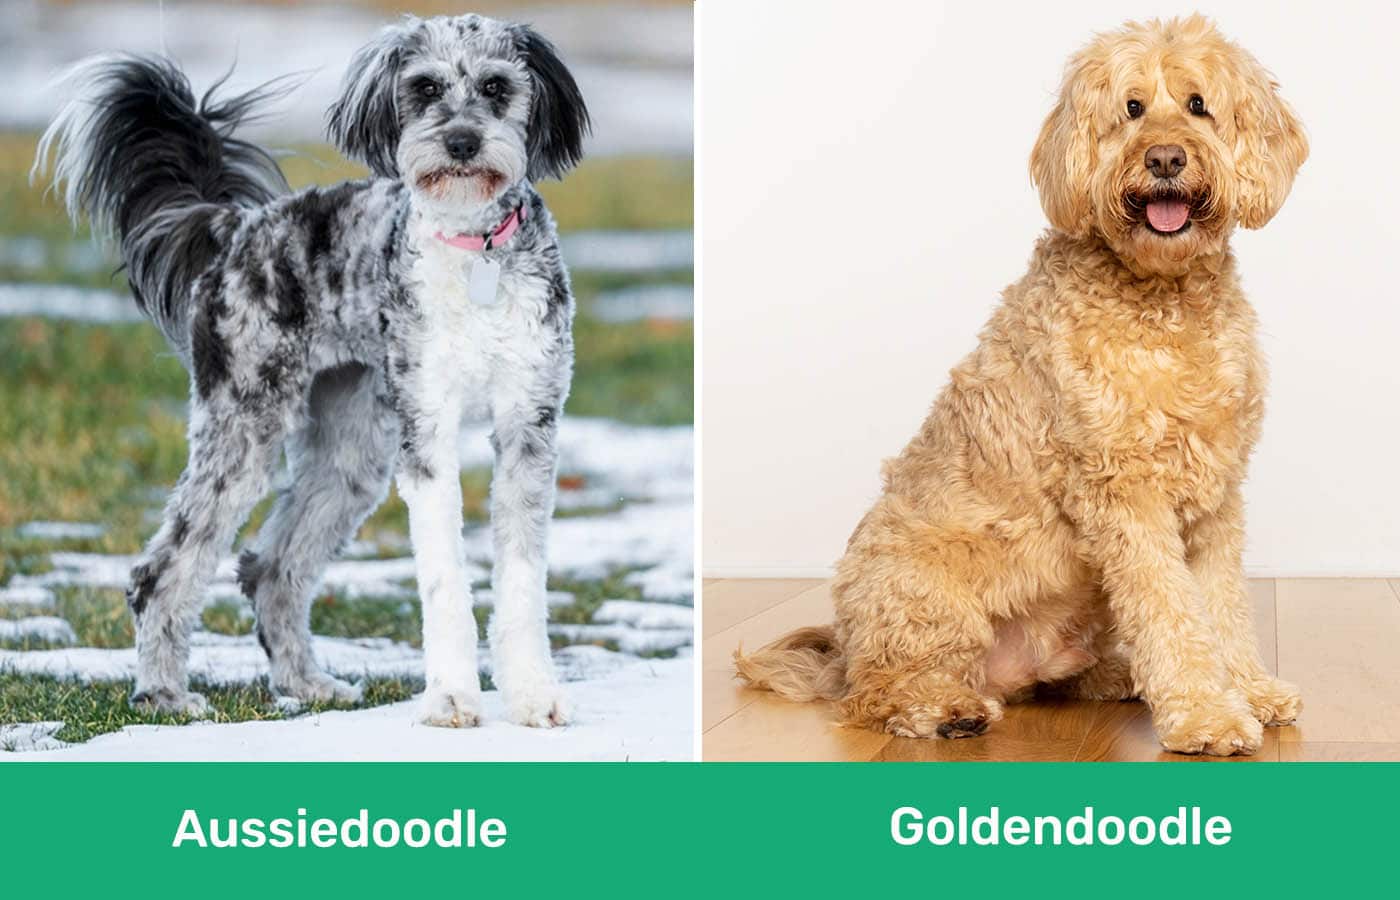 Aussiedoodle vs Goldendoodle side by side